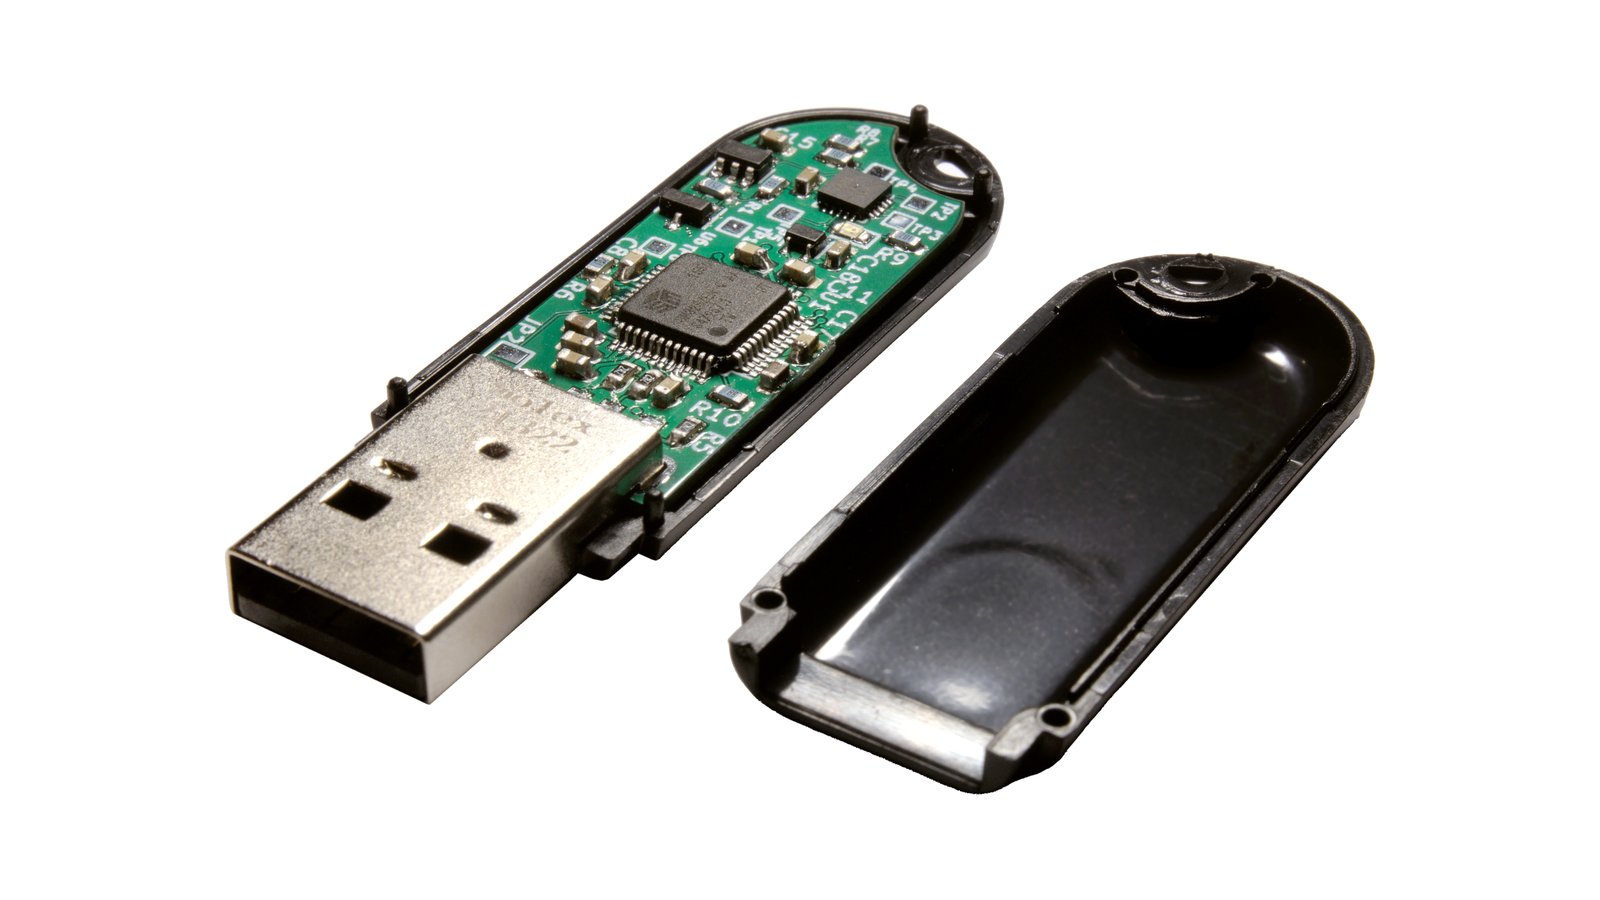 Ovrdrive USB flash drive